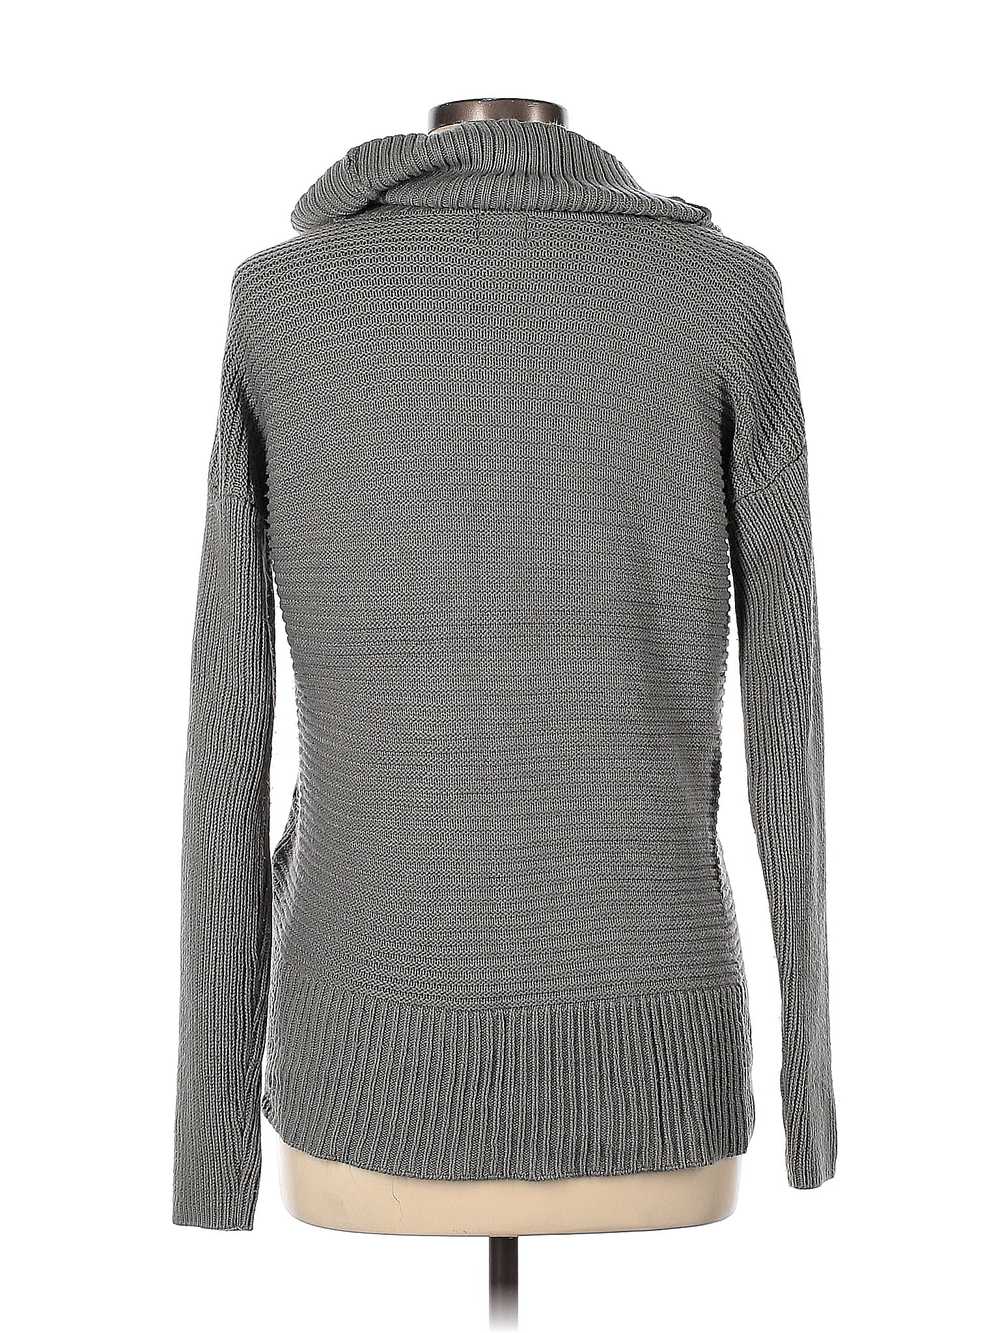 DressBarn Women Gray Pullover Sweater L - image 2